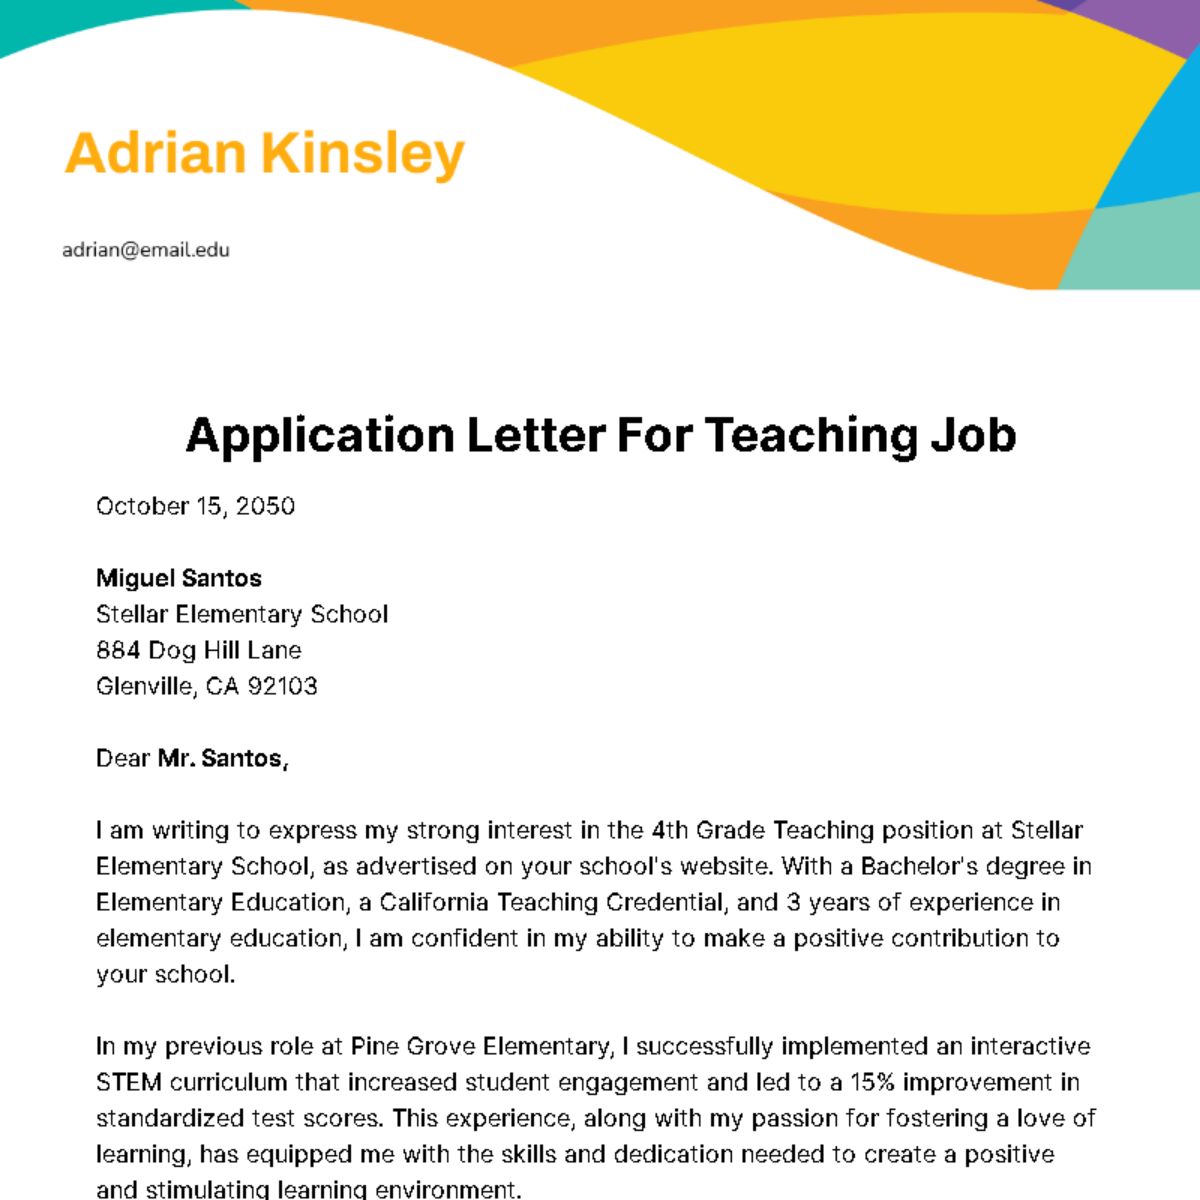 Application Letter for Teaching Job Template